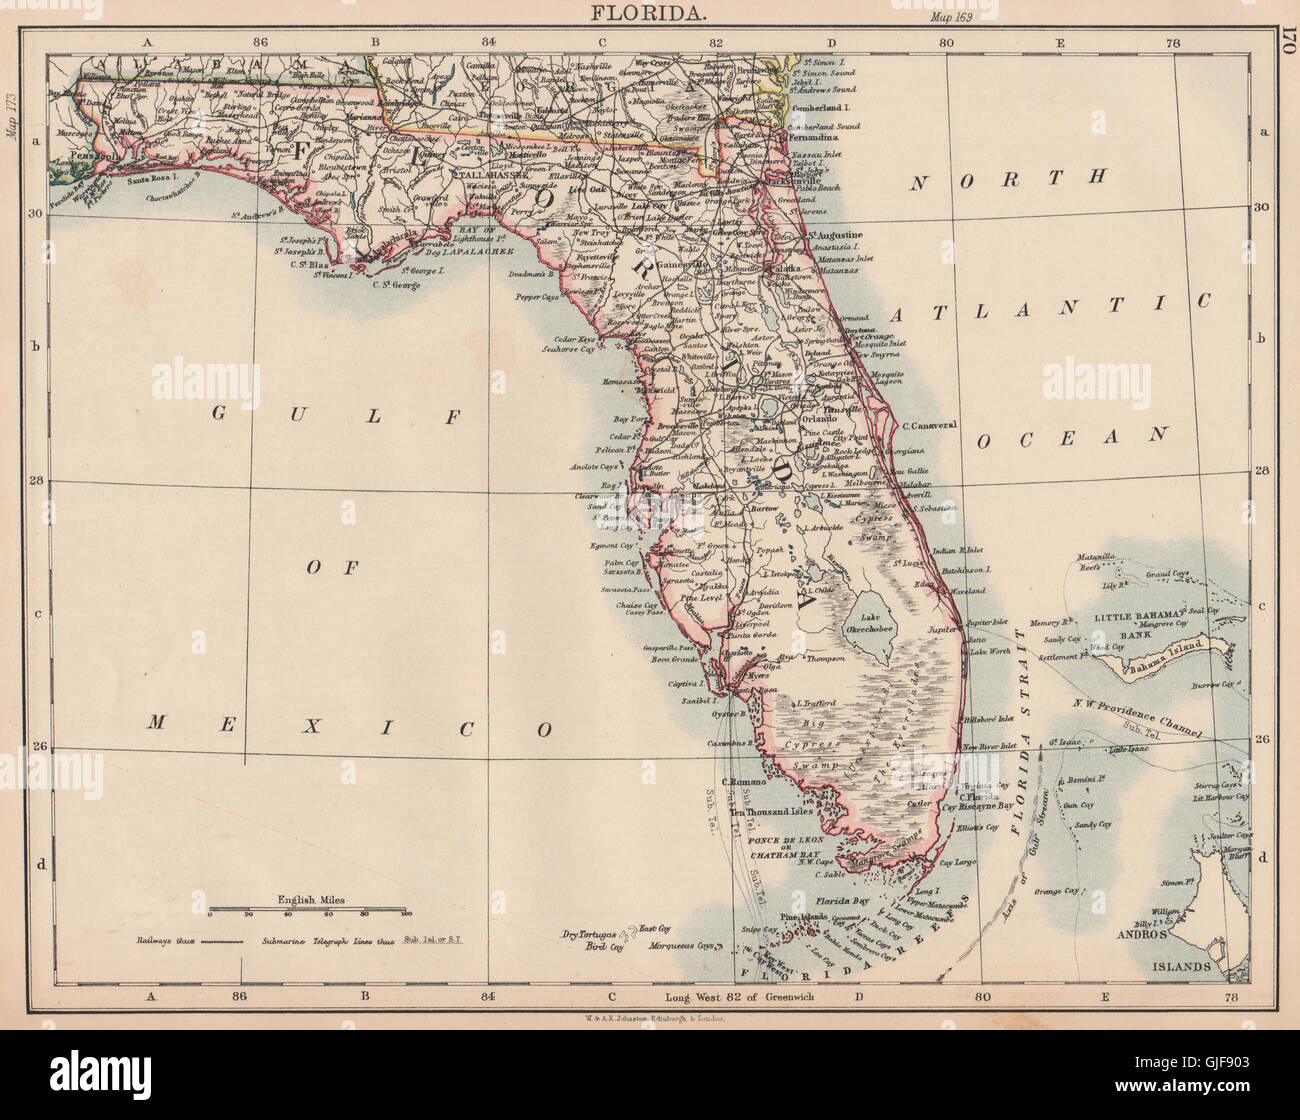 FLORIDA. State map. Shows Miami. Railroads. JOHNSTON, 1906 Stock Photo